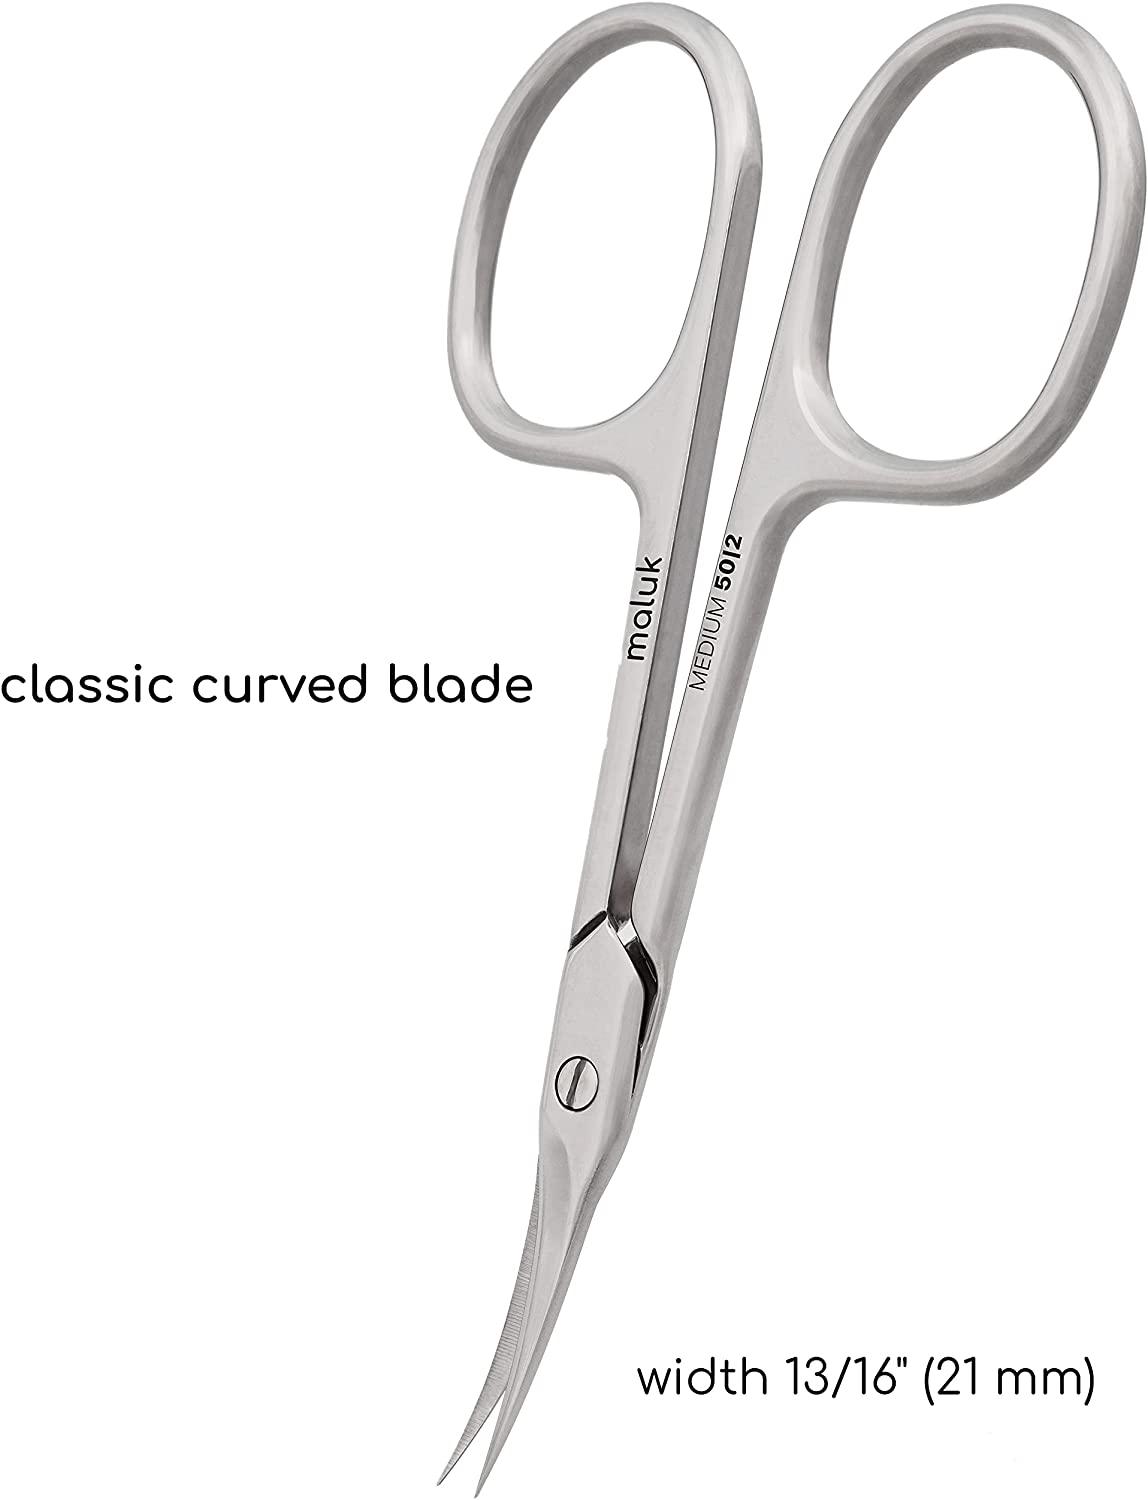 Cycled Steel Cuticle scissors